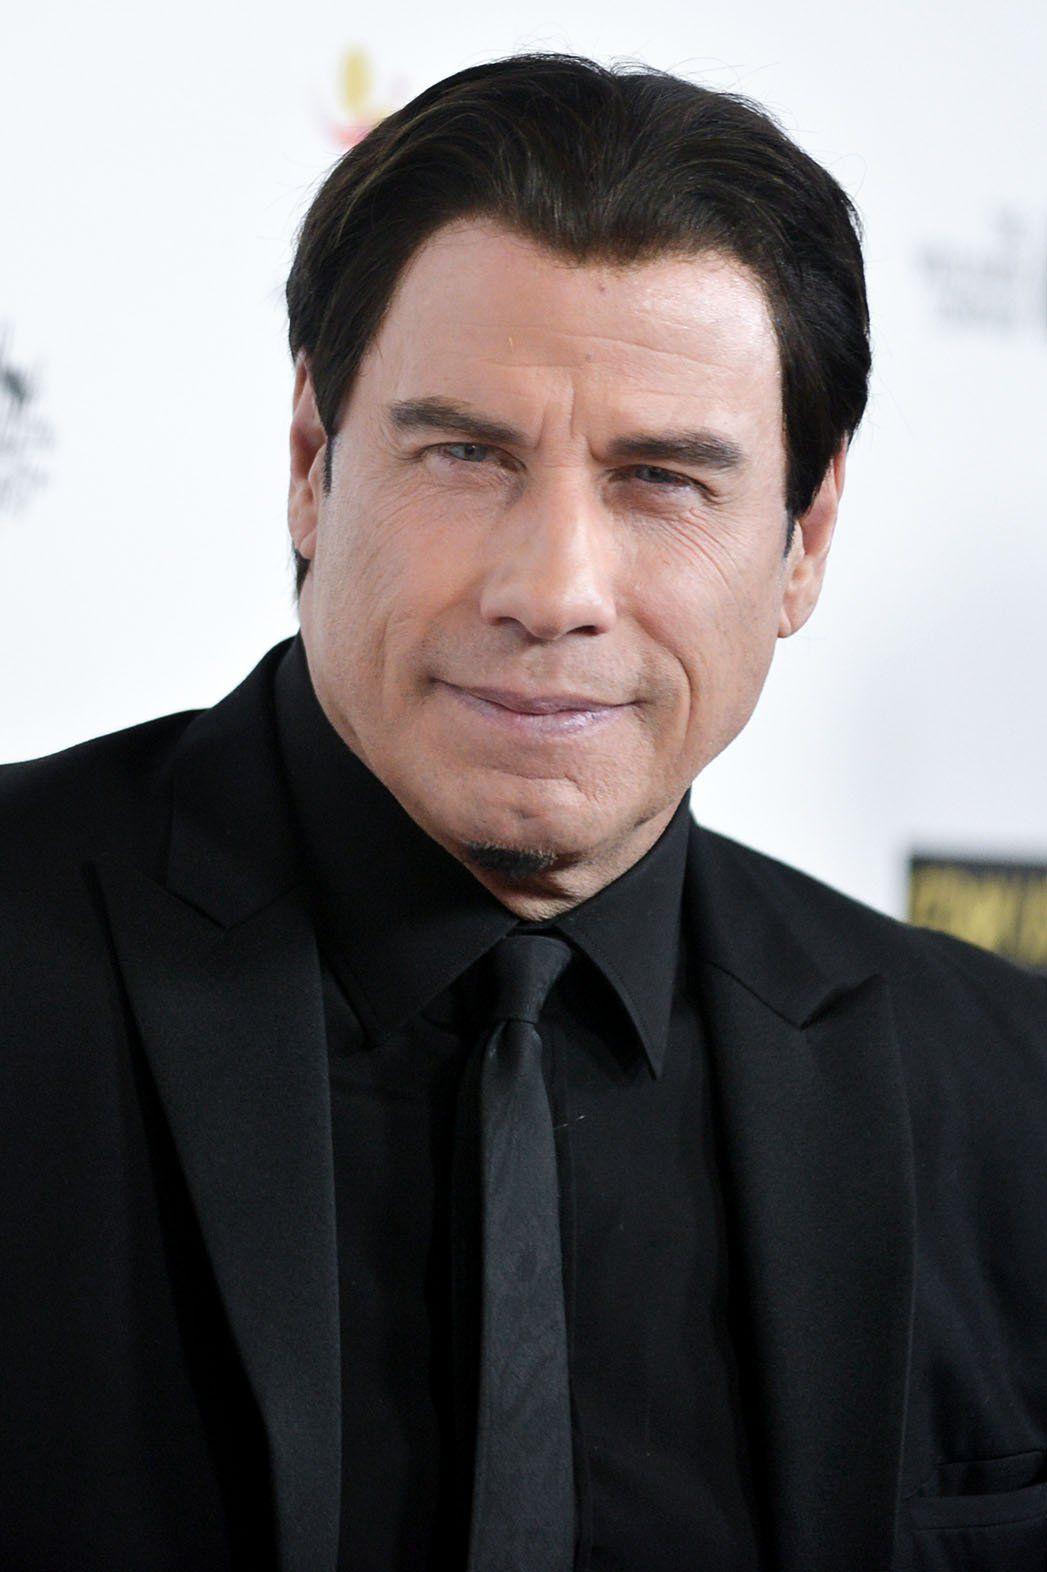 Awesome John Travolta Image. John Travolta Wallpaper